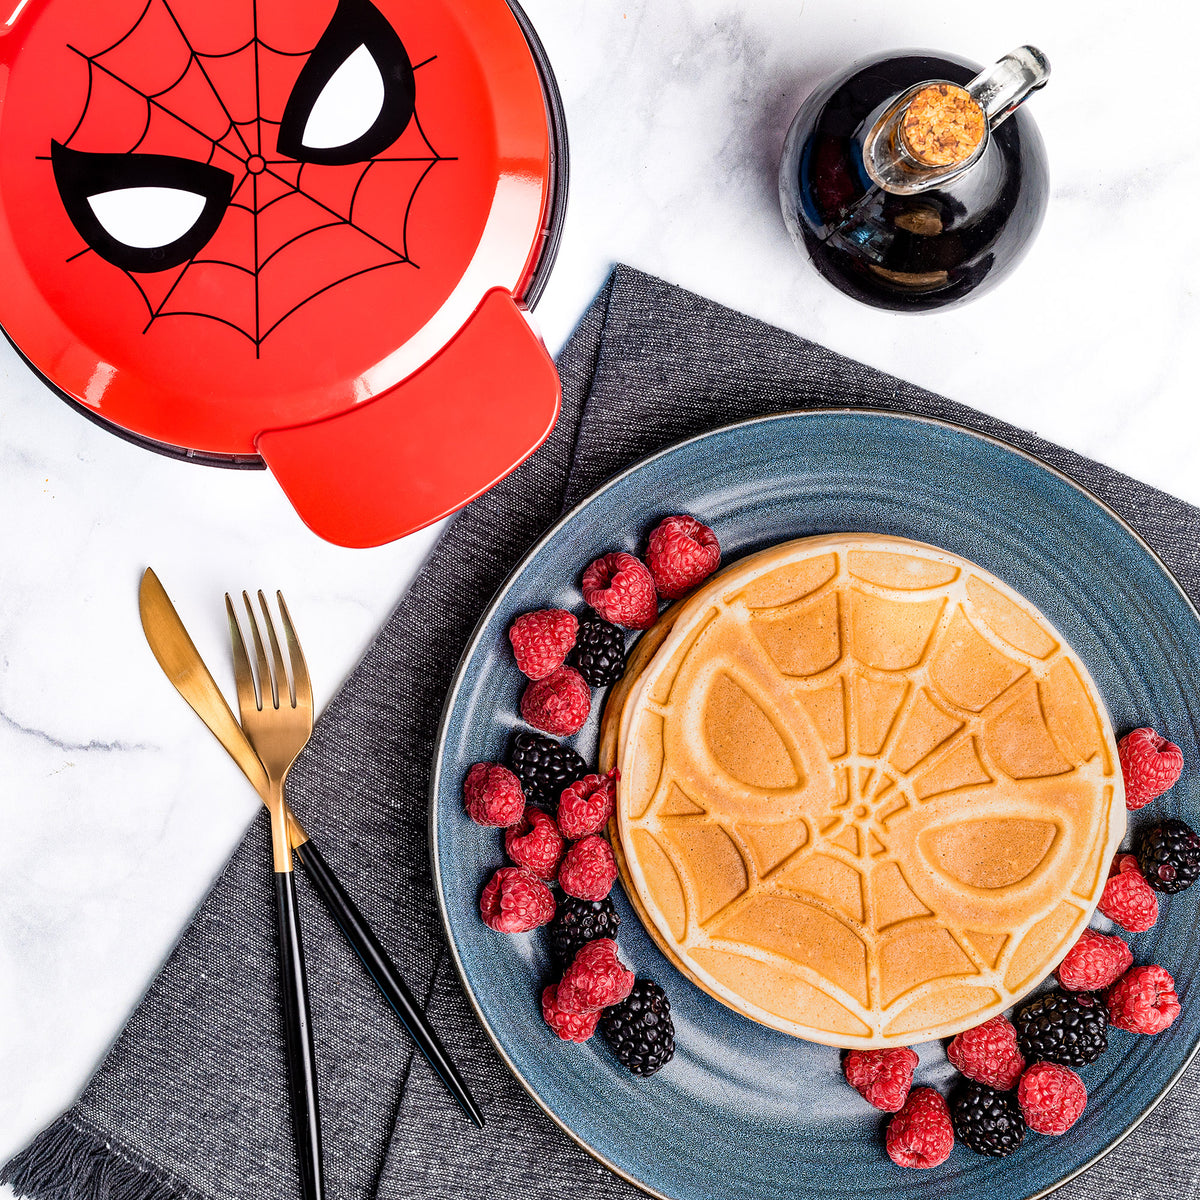 Marvel Chibi Spider-Man Waffle Maker